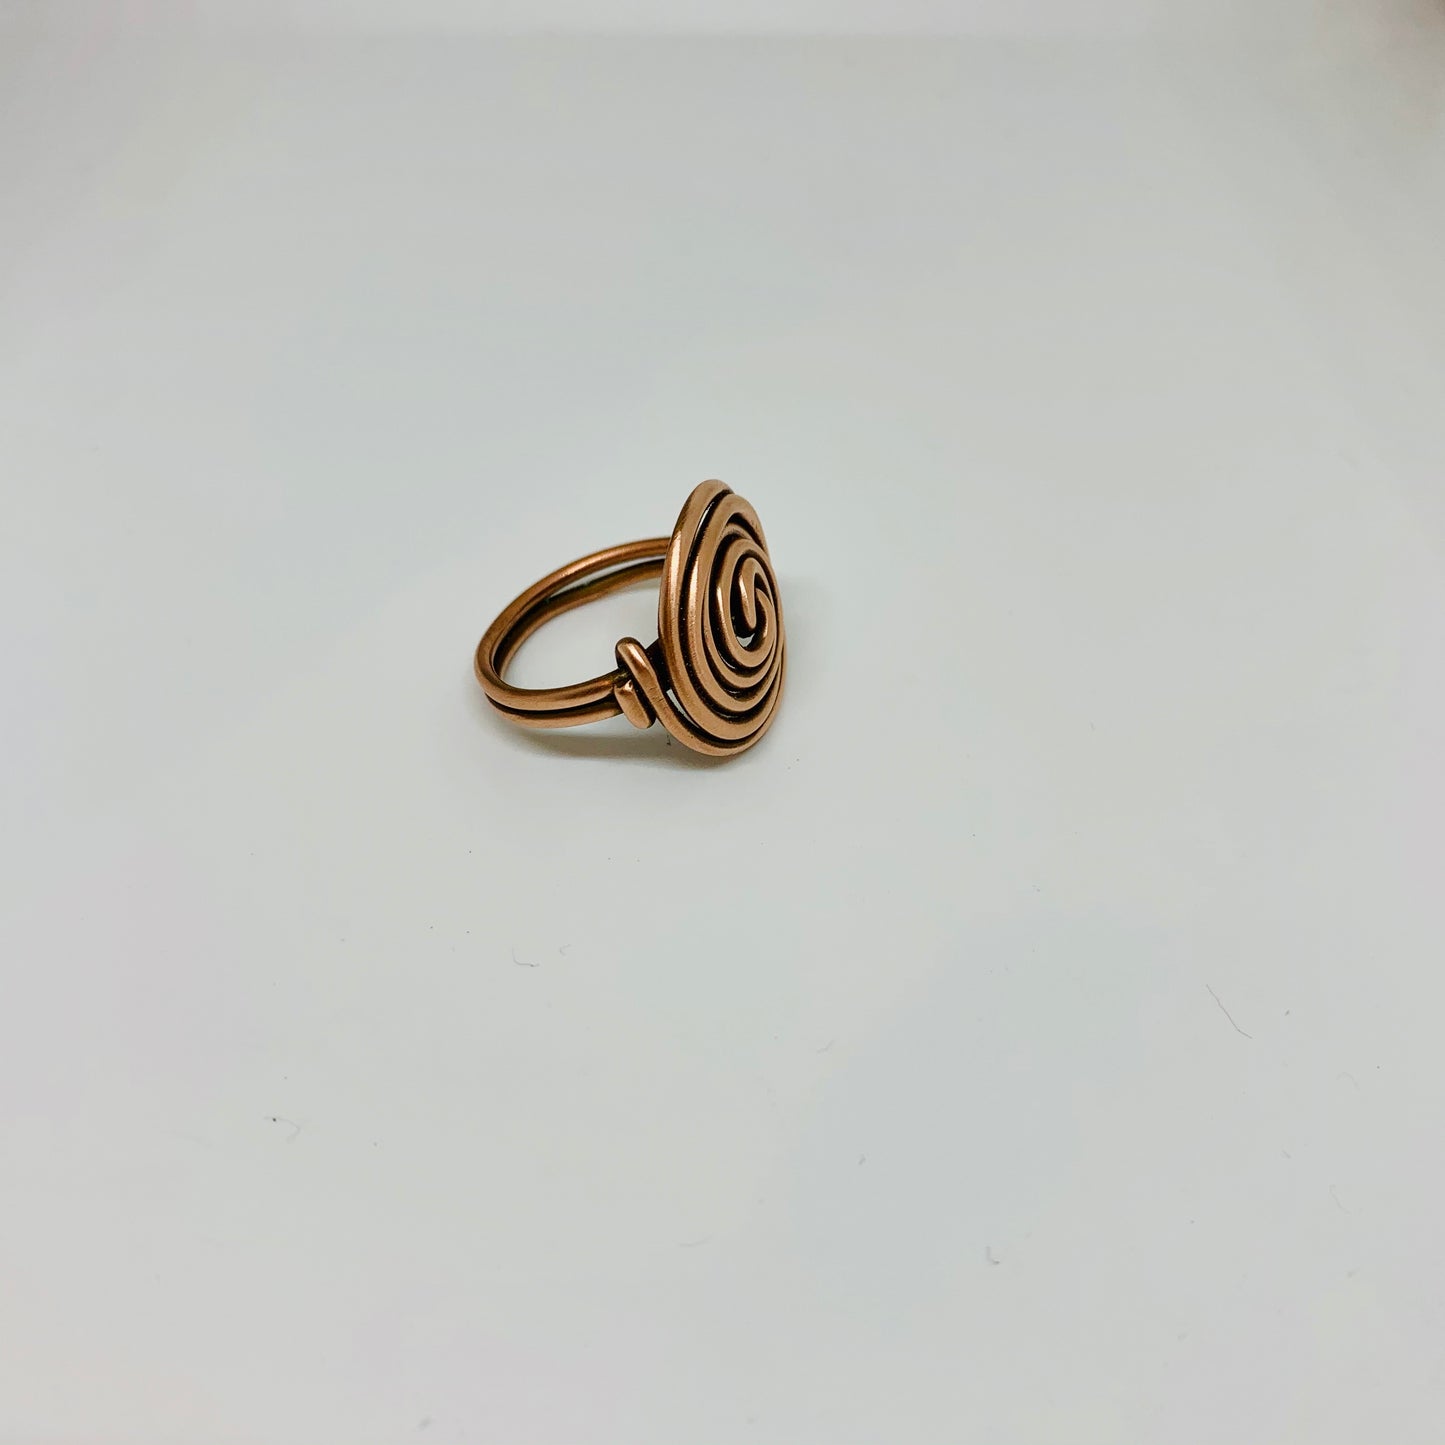 Copper circle ring